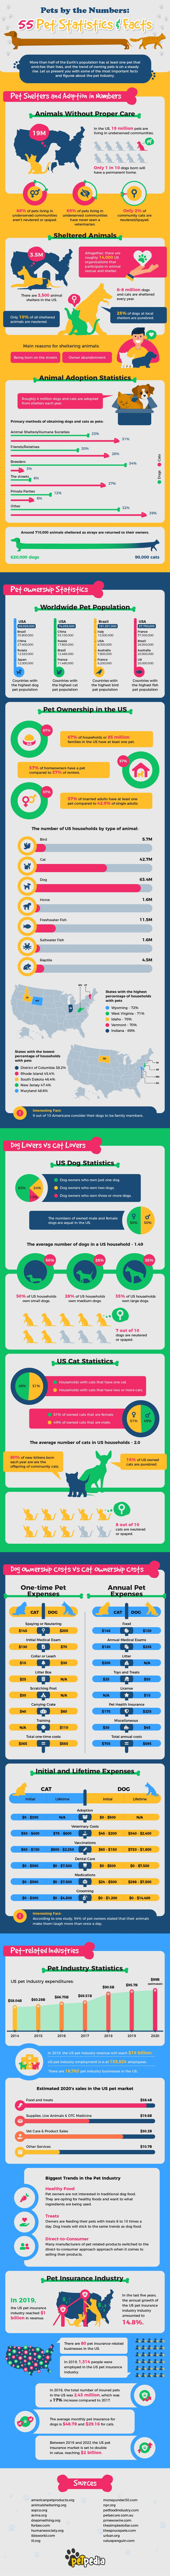 Pet Statistics - Infographic 1